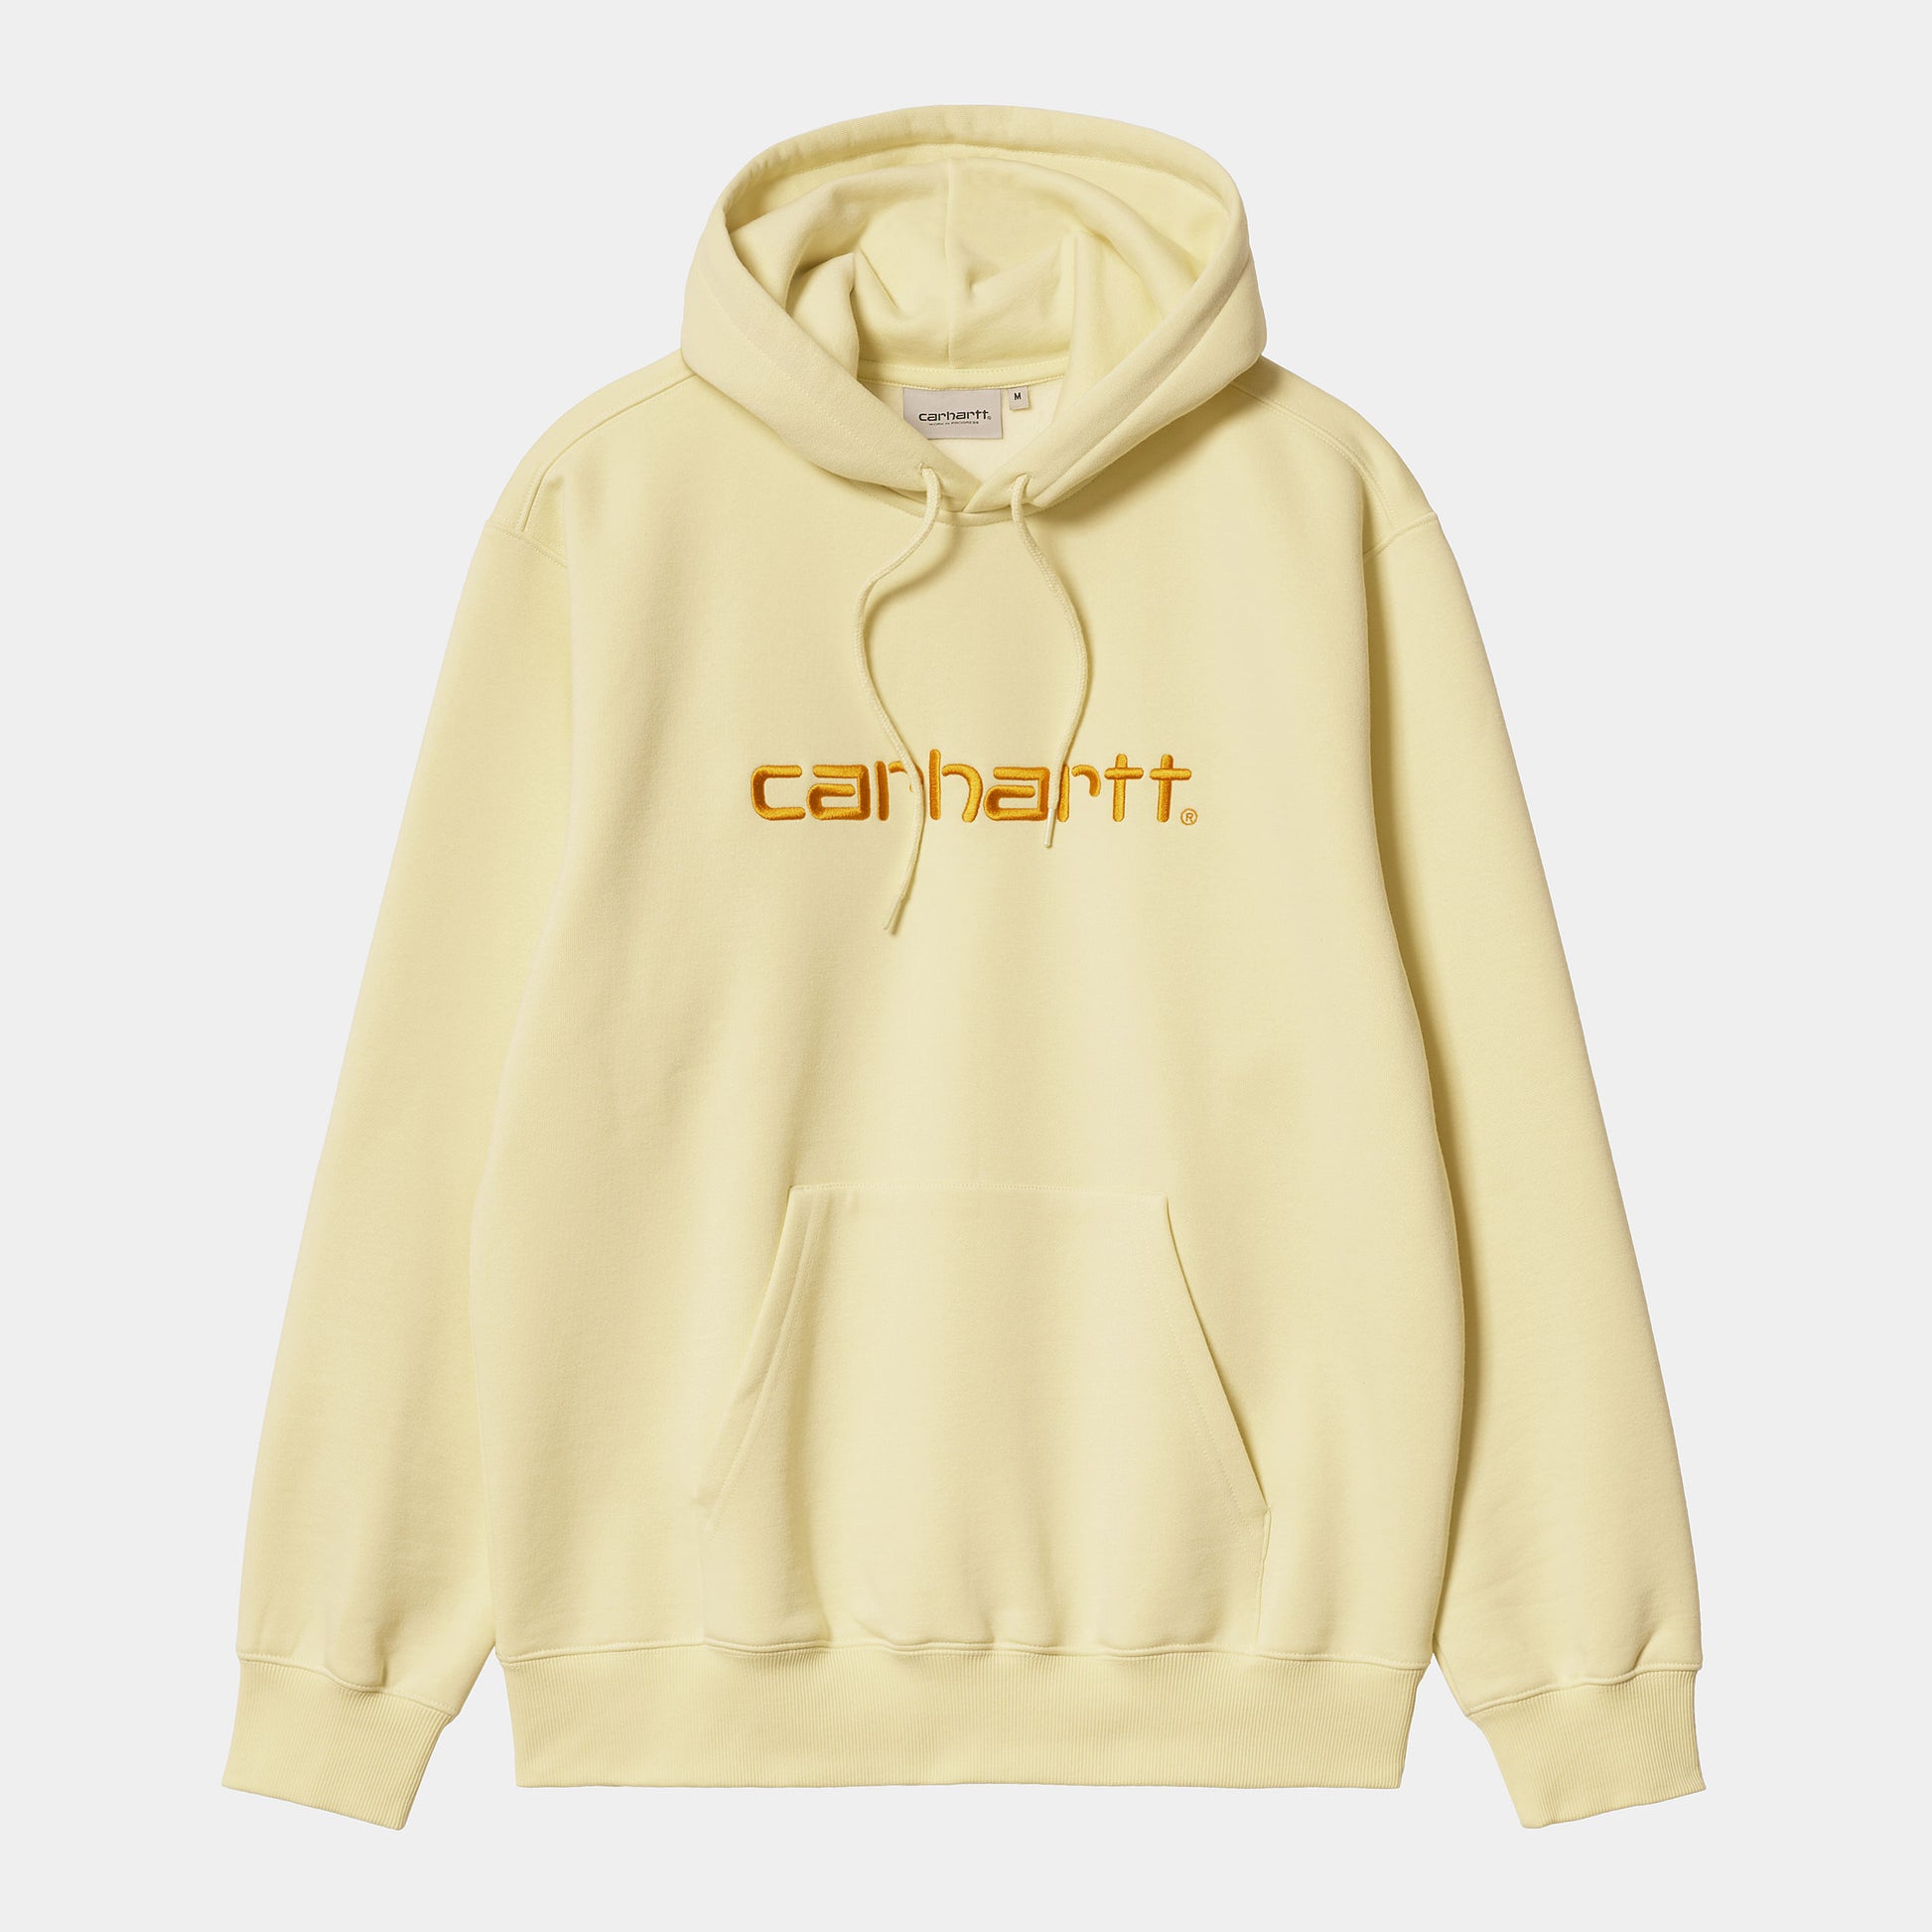 Carhartt Hooded Sweat Soft Yellow Pop